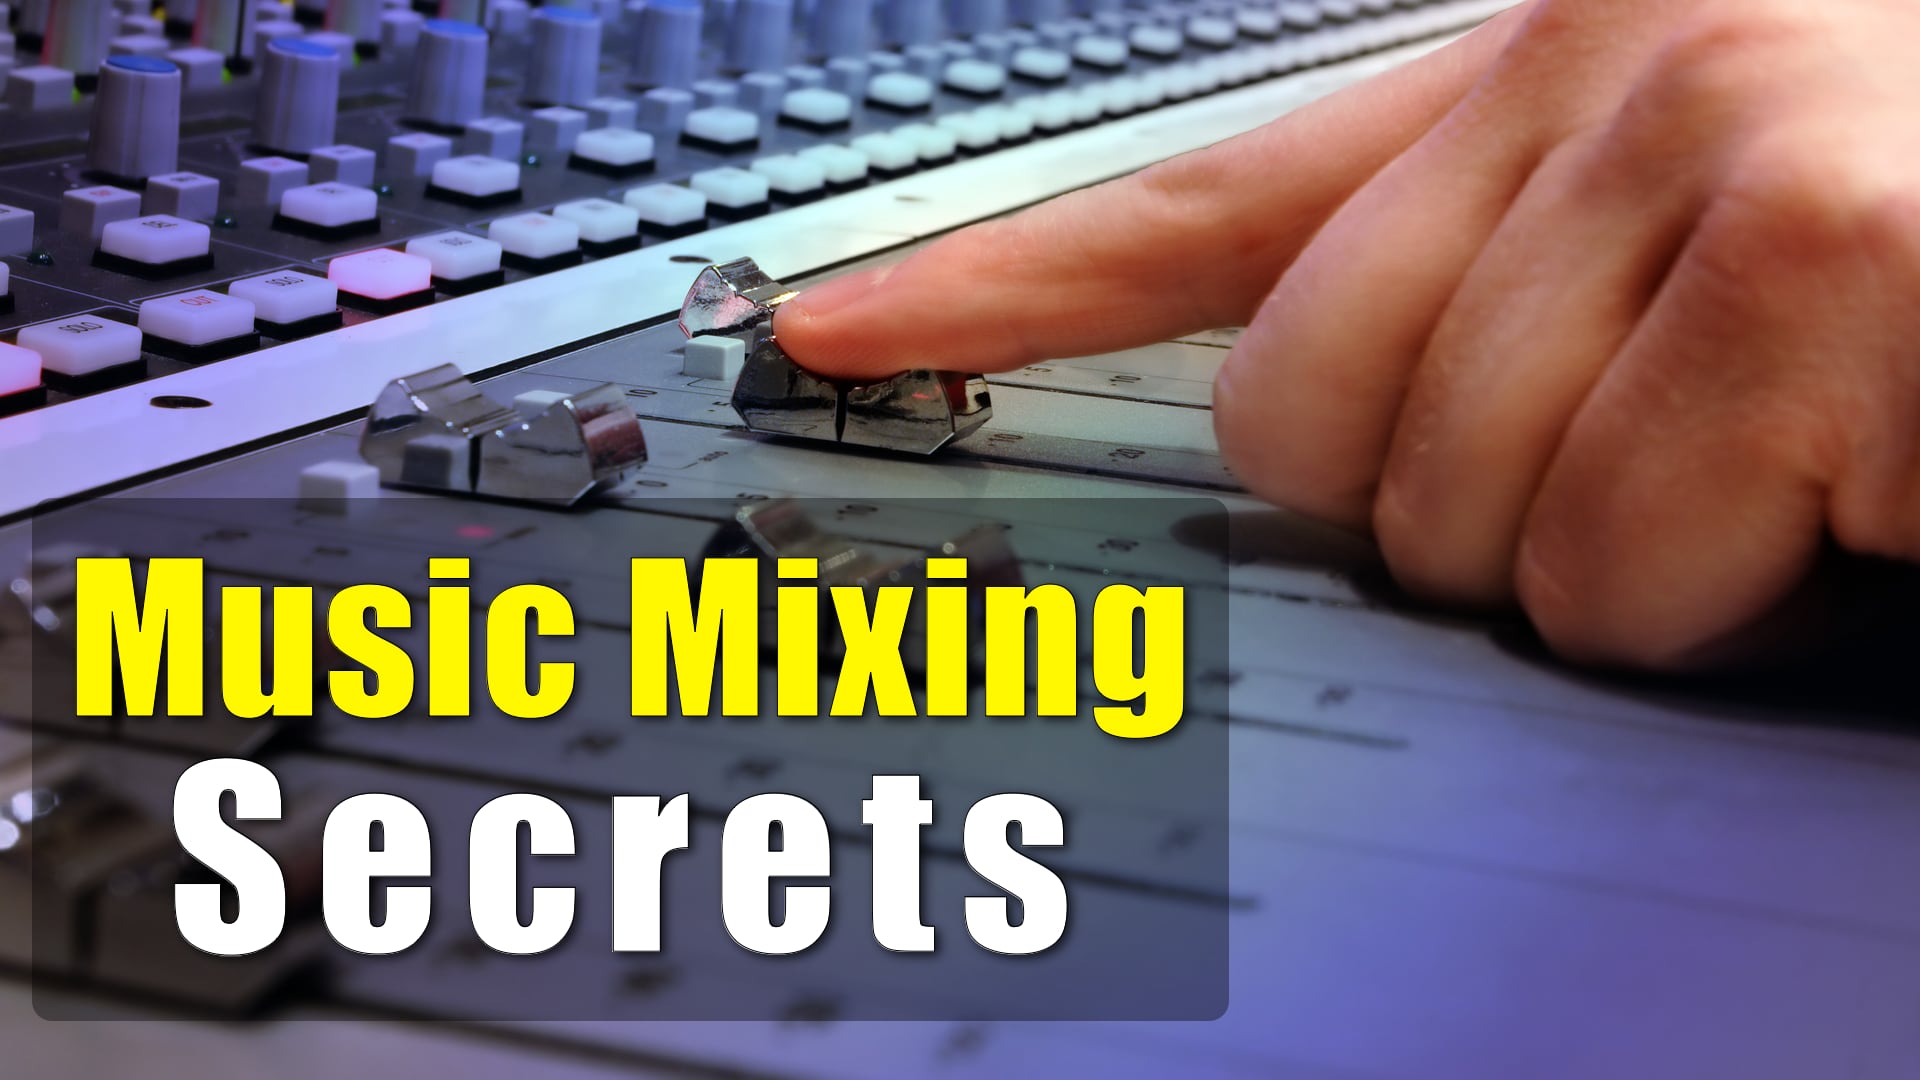 Music mixing secrets webinar image